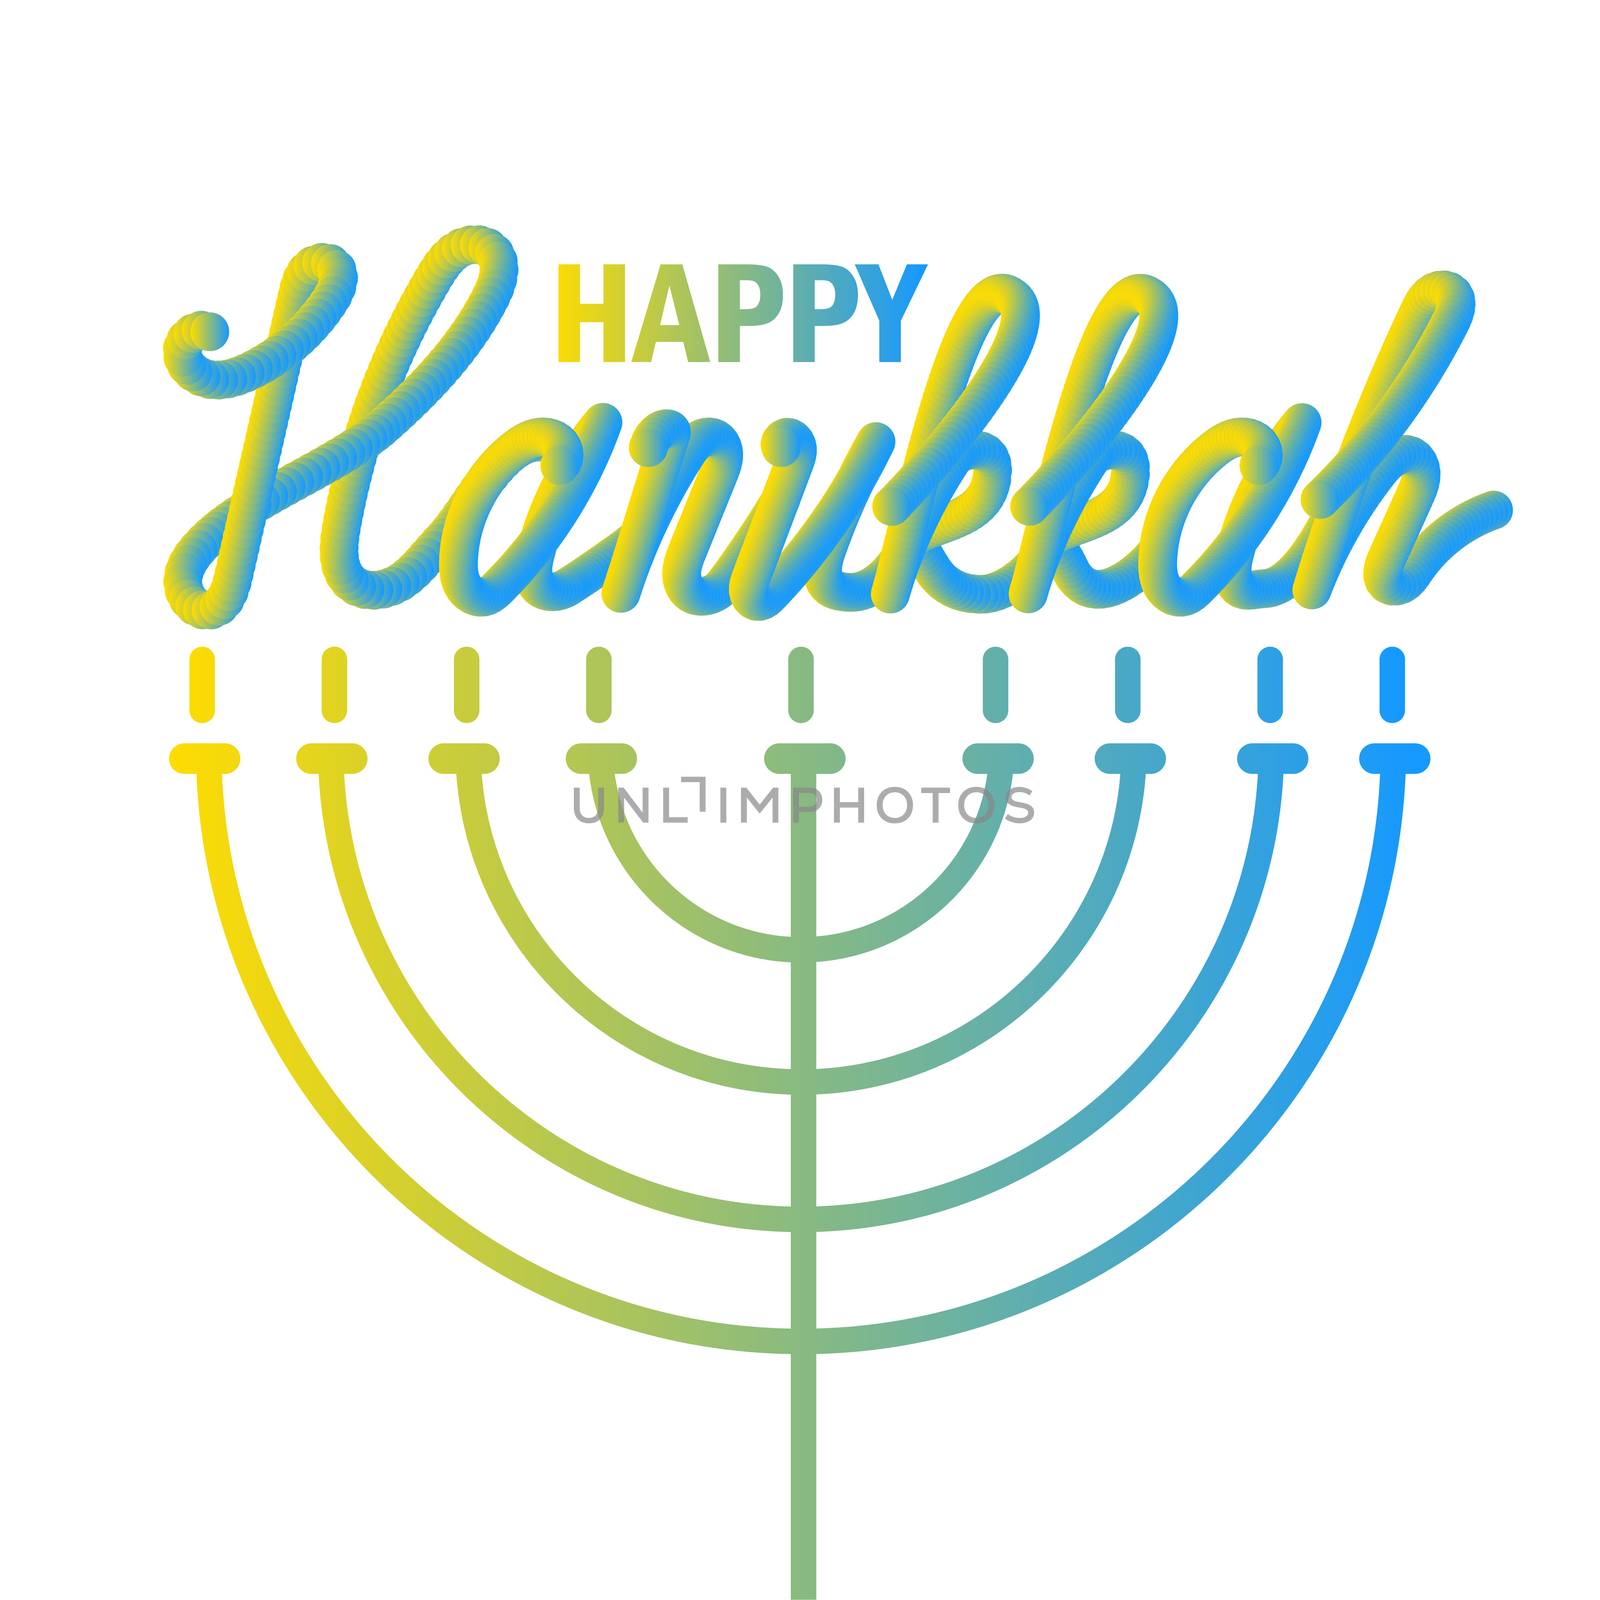 Hanukkah Greeting Banner by barsrsind